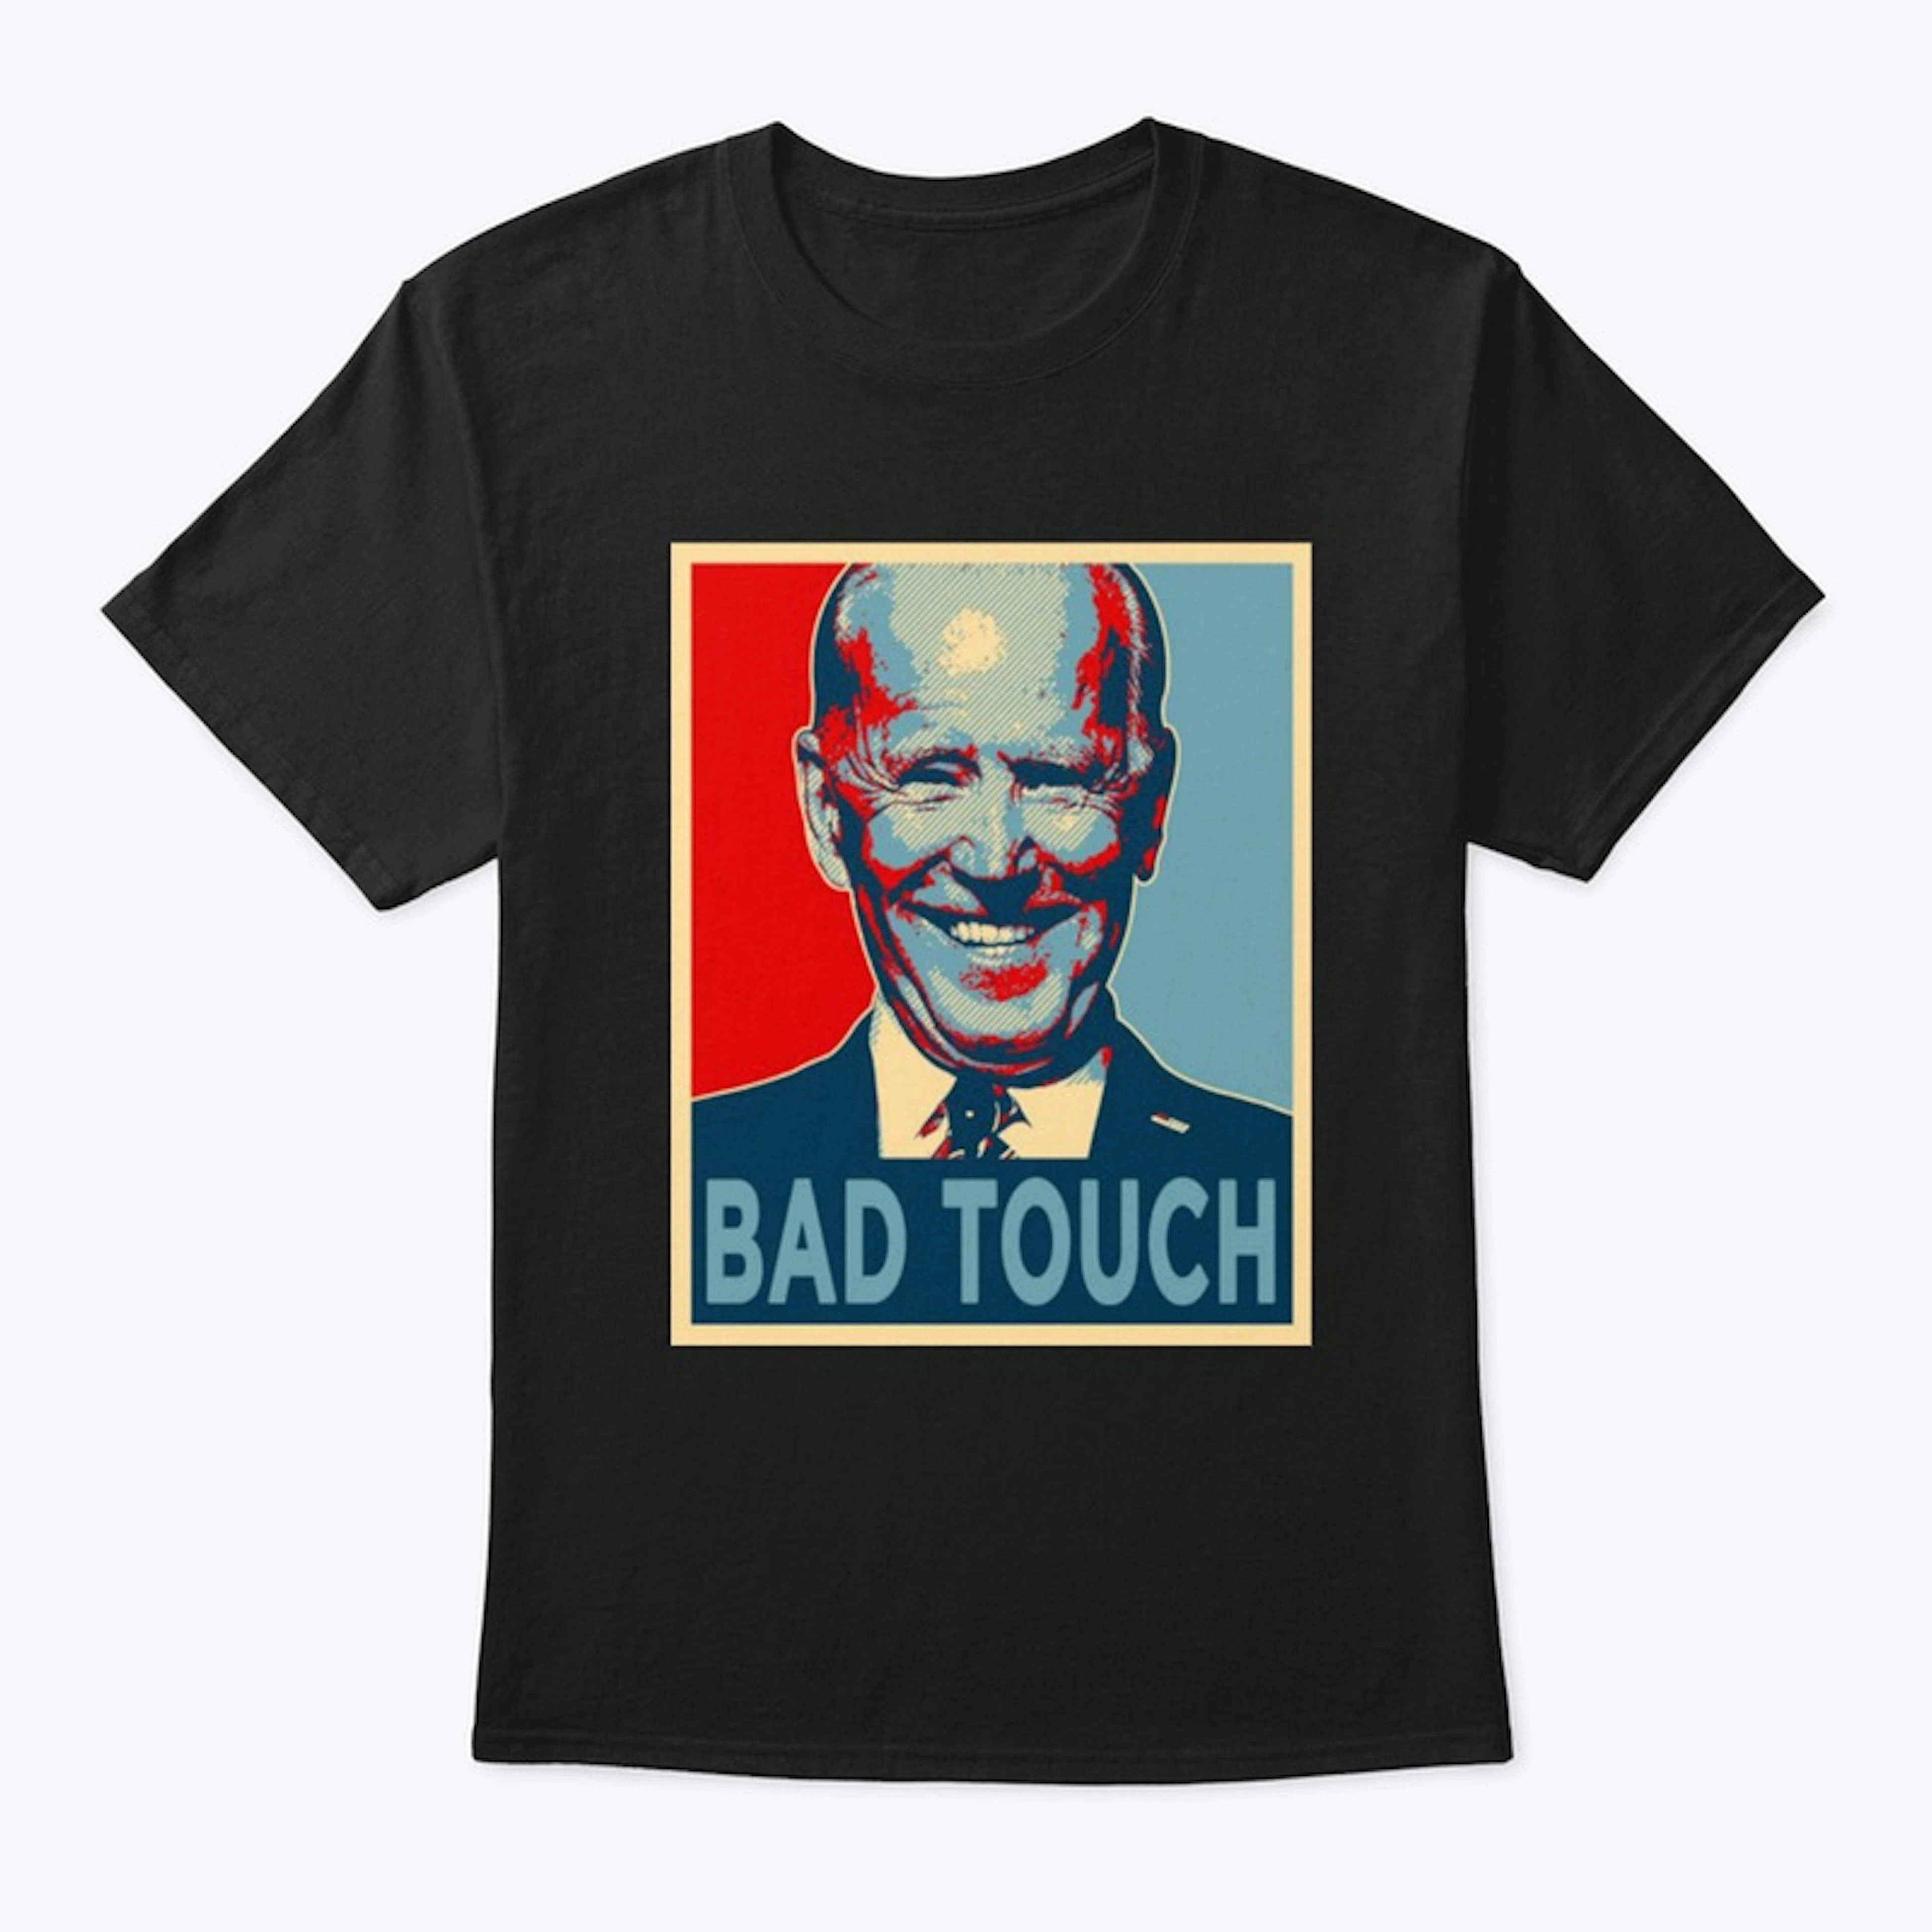 Joe Biden 2024 Merch